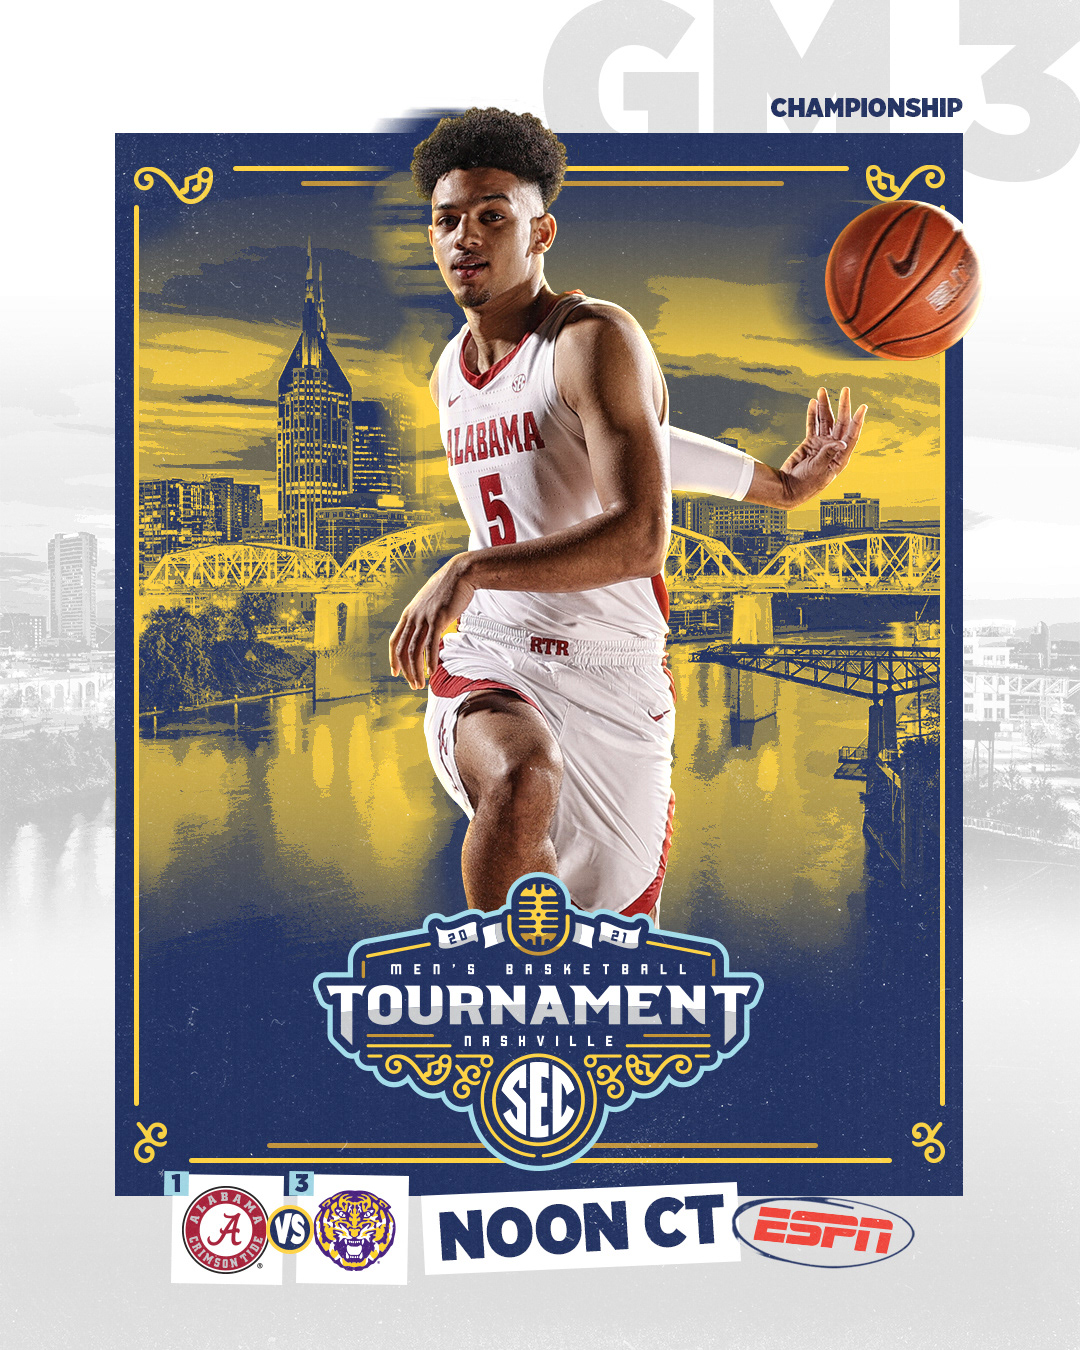 2020 21 Alabama Men S Basketball National Game Graphics On Behance